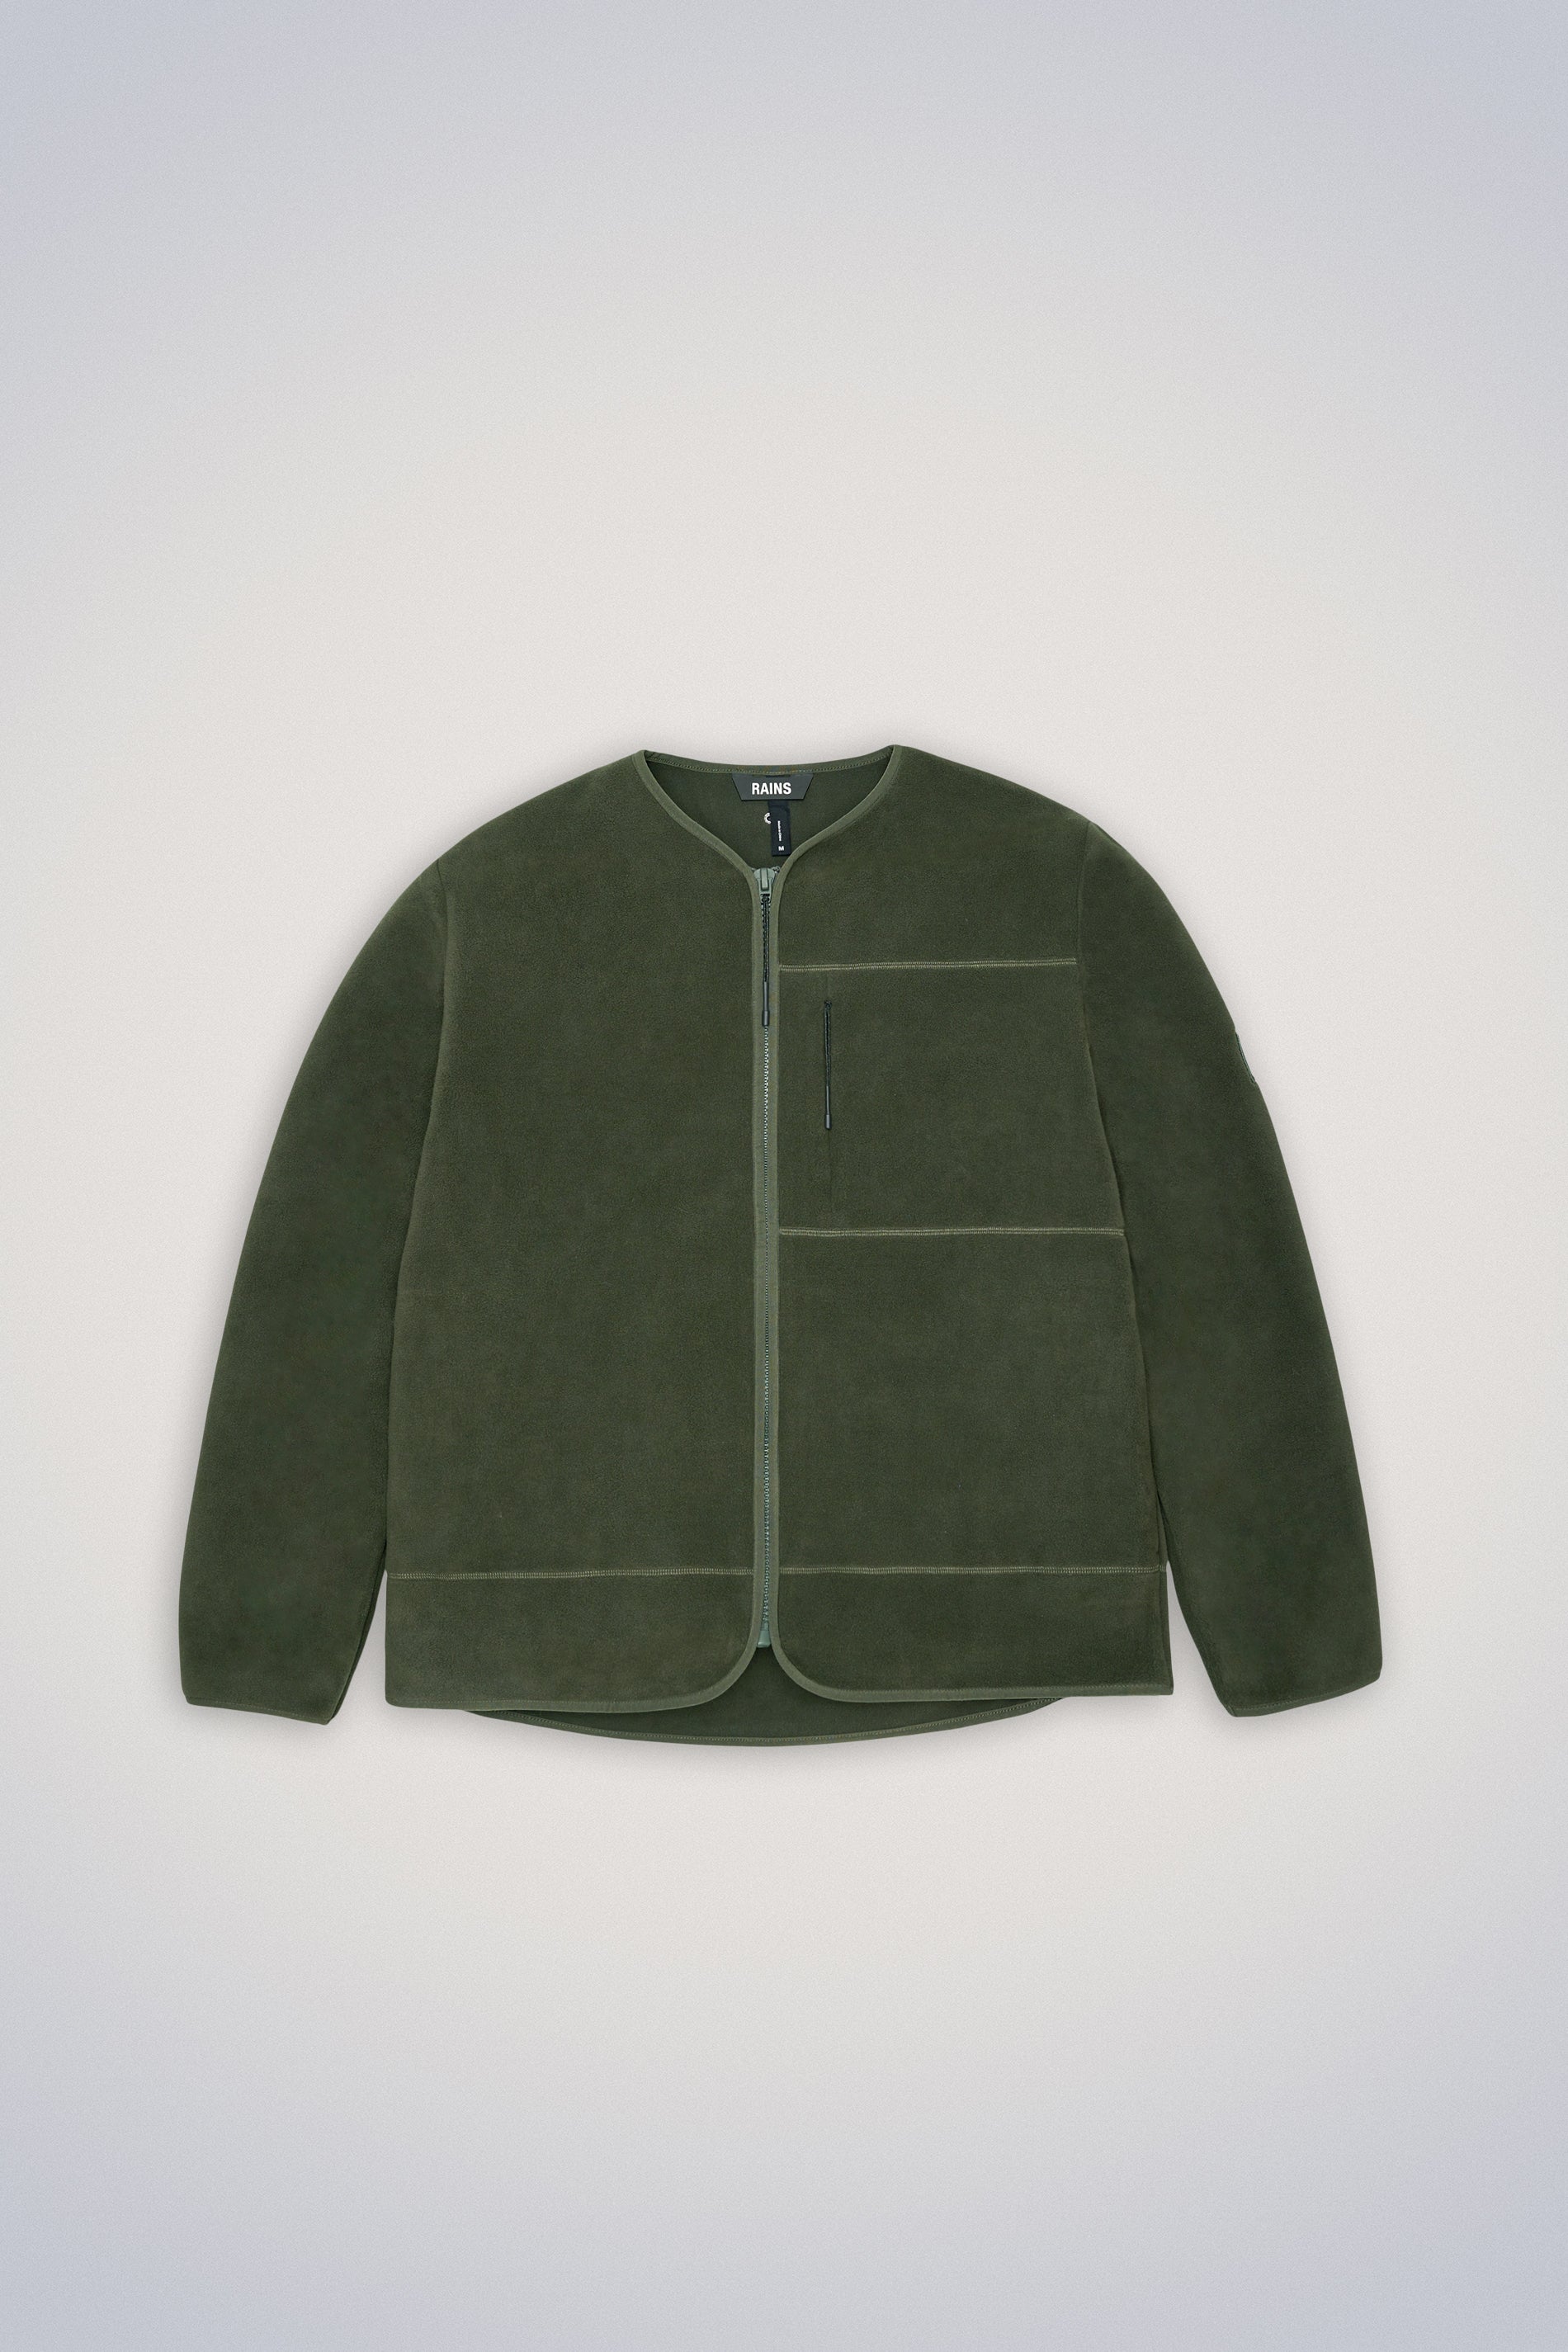 Men's Fleece Jackets | Mens Fleece Lined Jacket from Rains®